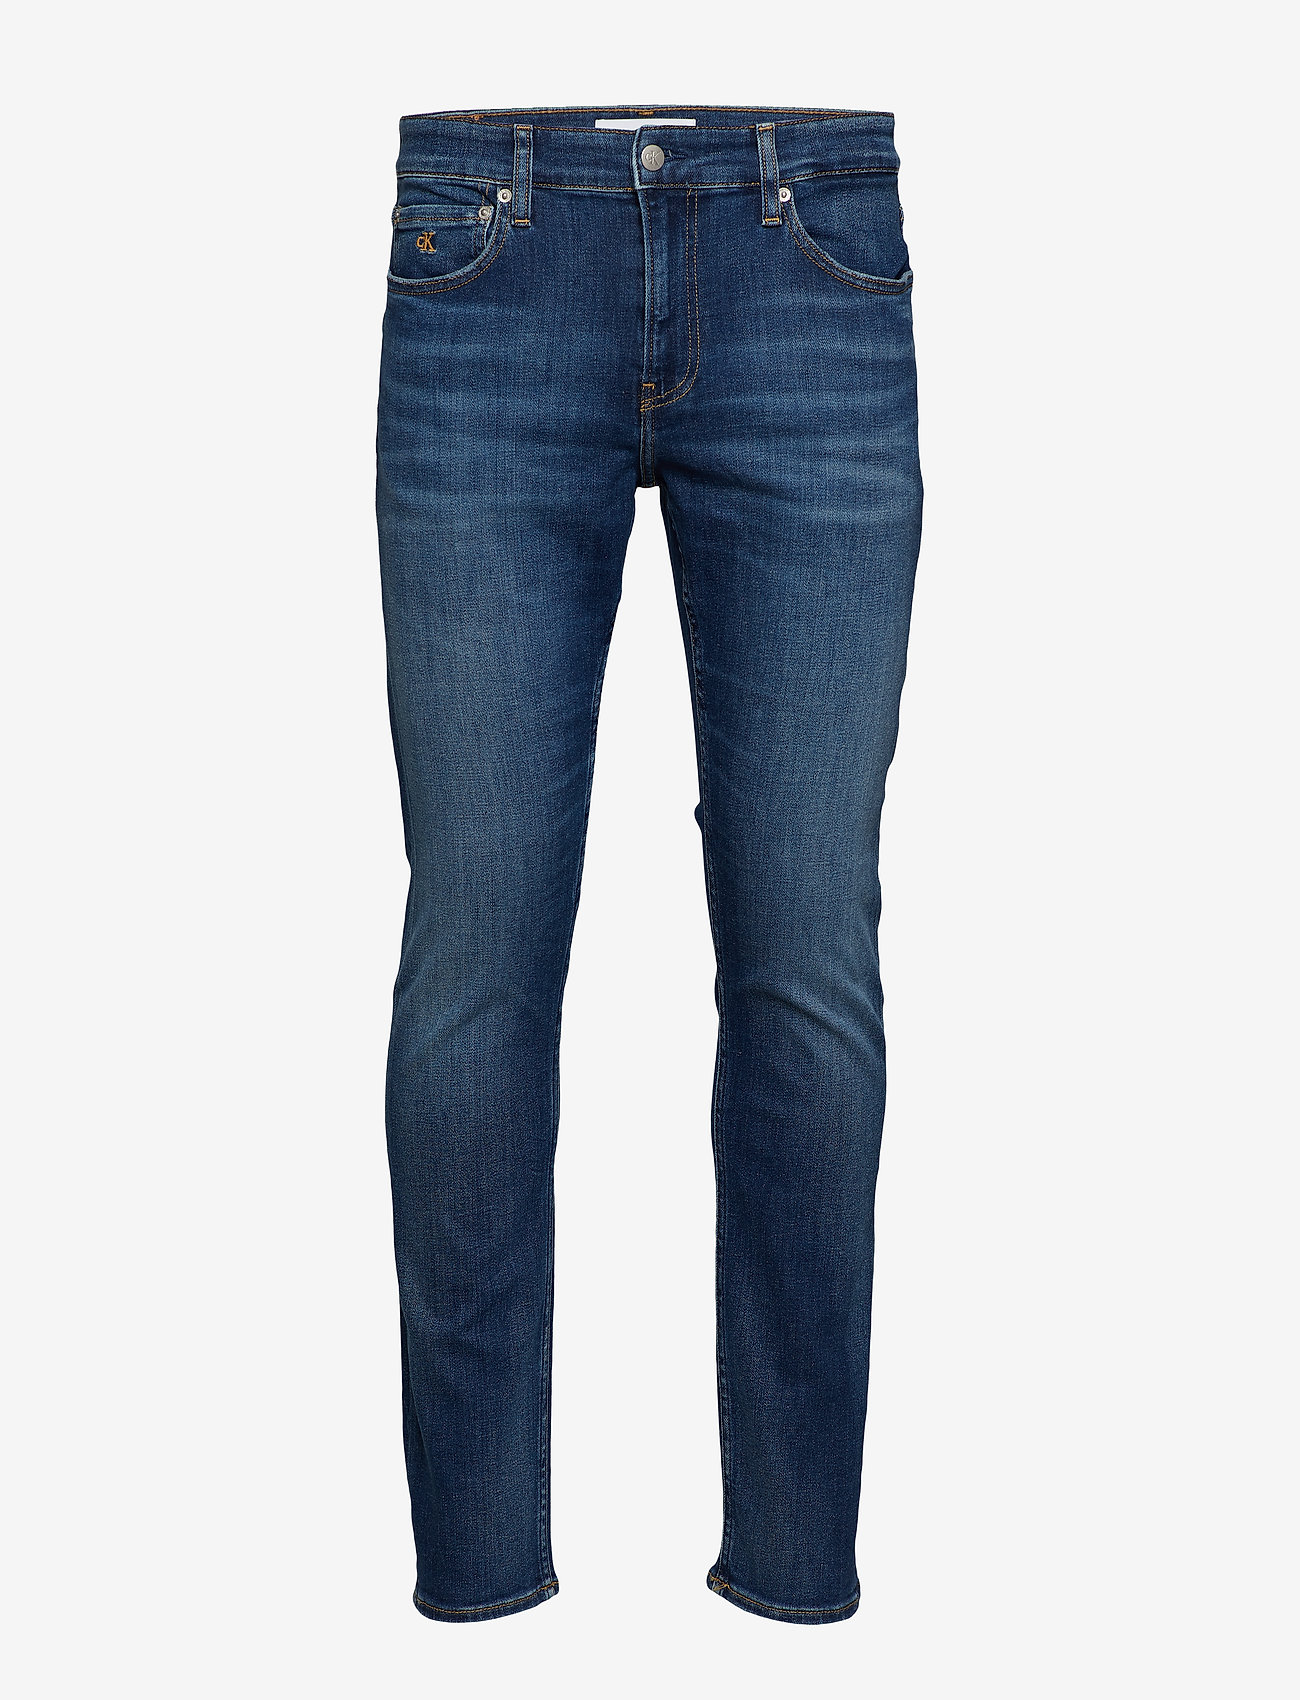 Introducir 72+ imagen calvin klein jeans ckj 026 slim